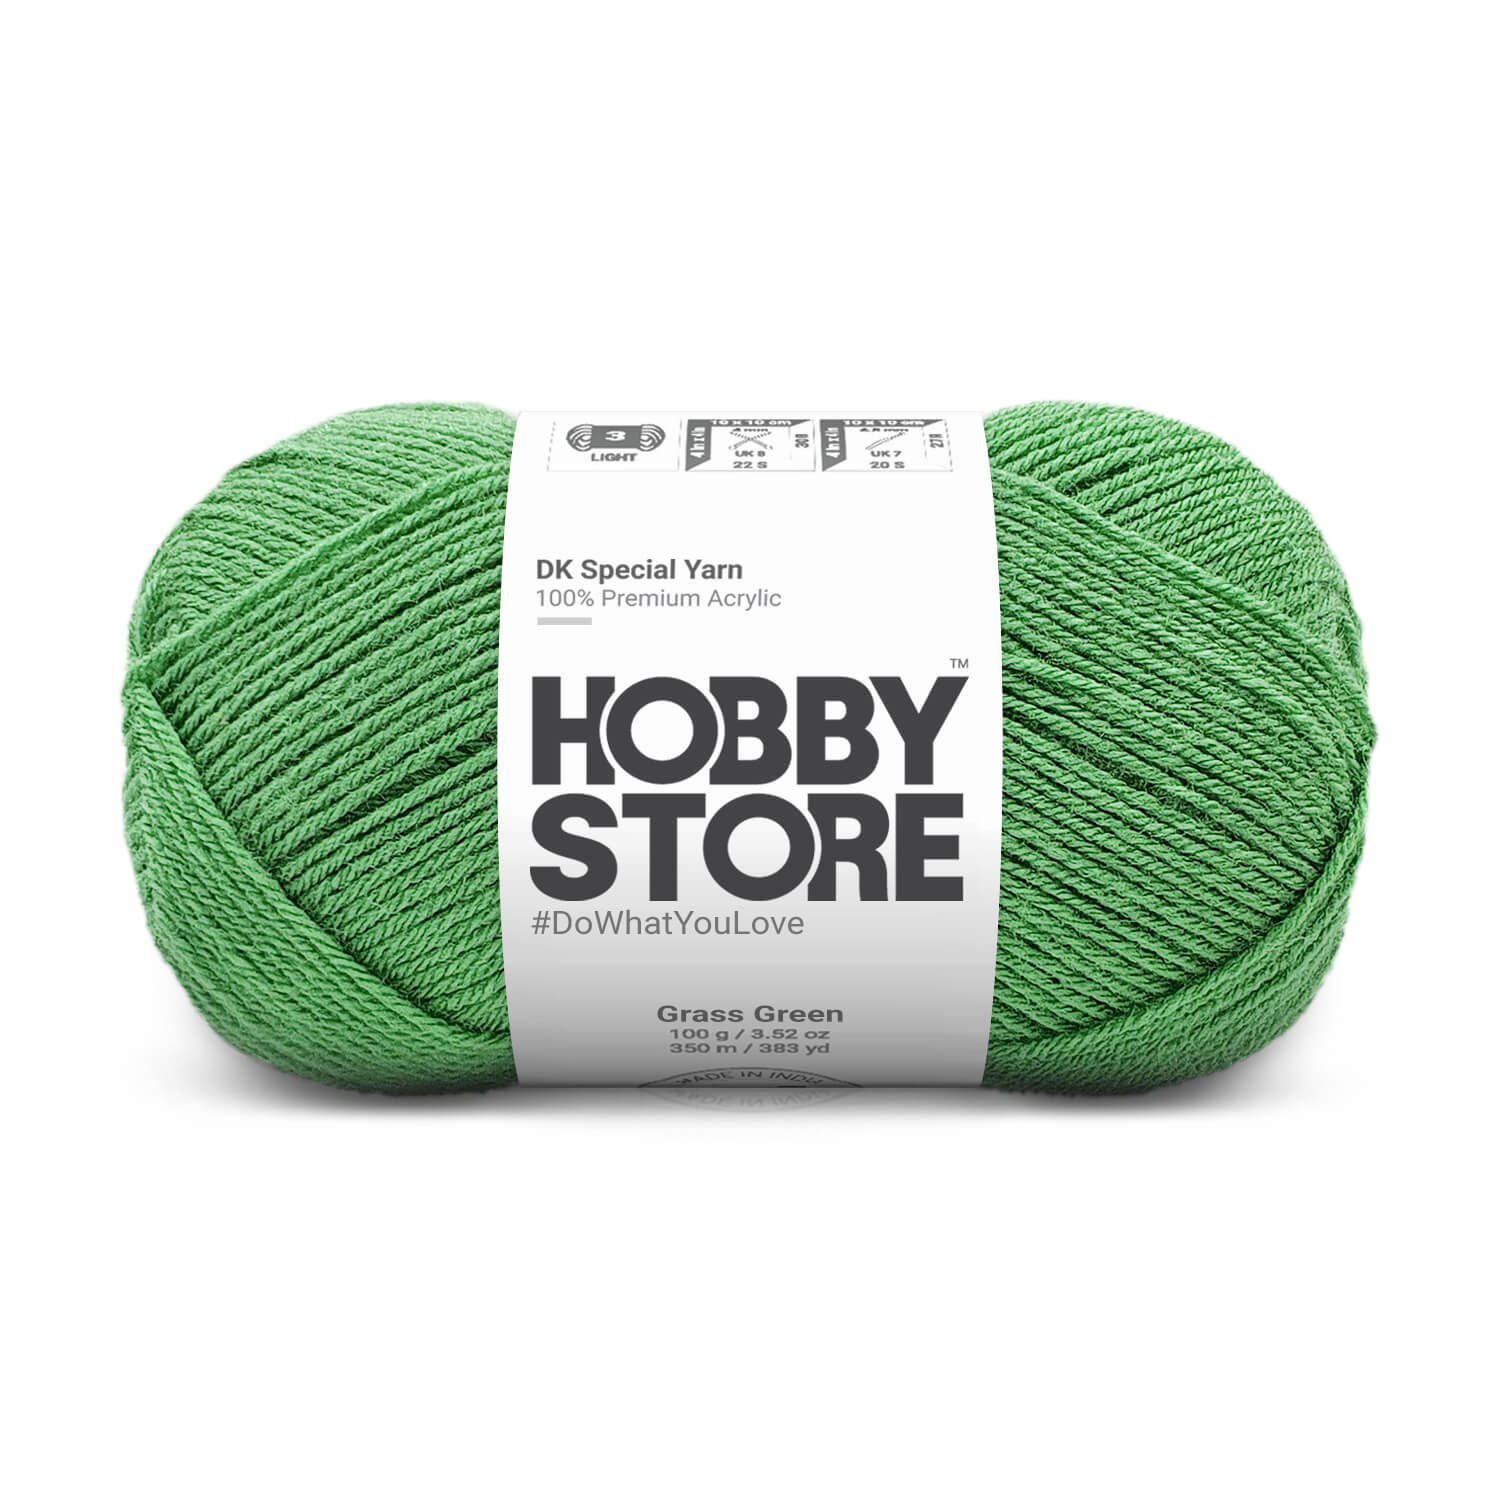 Hobby Store DK Special Yarn - Grass Green 1821